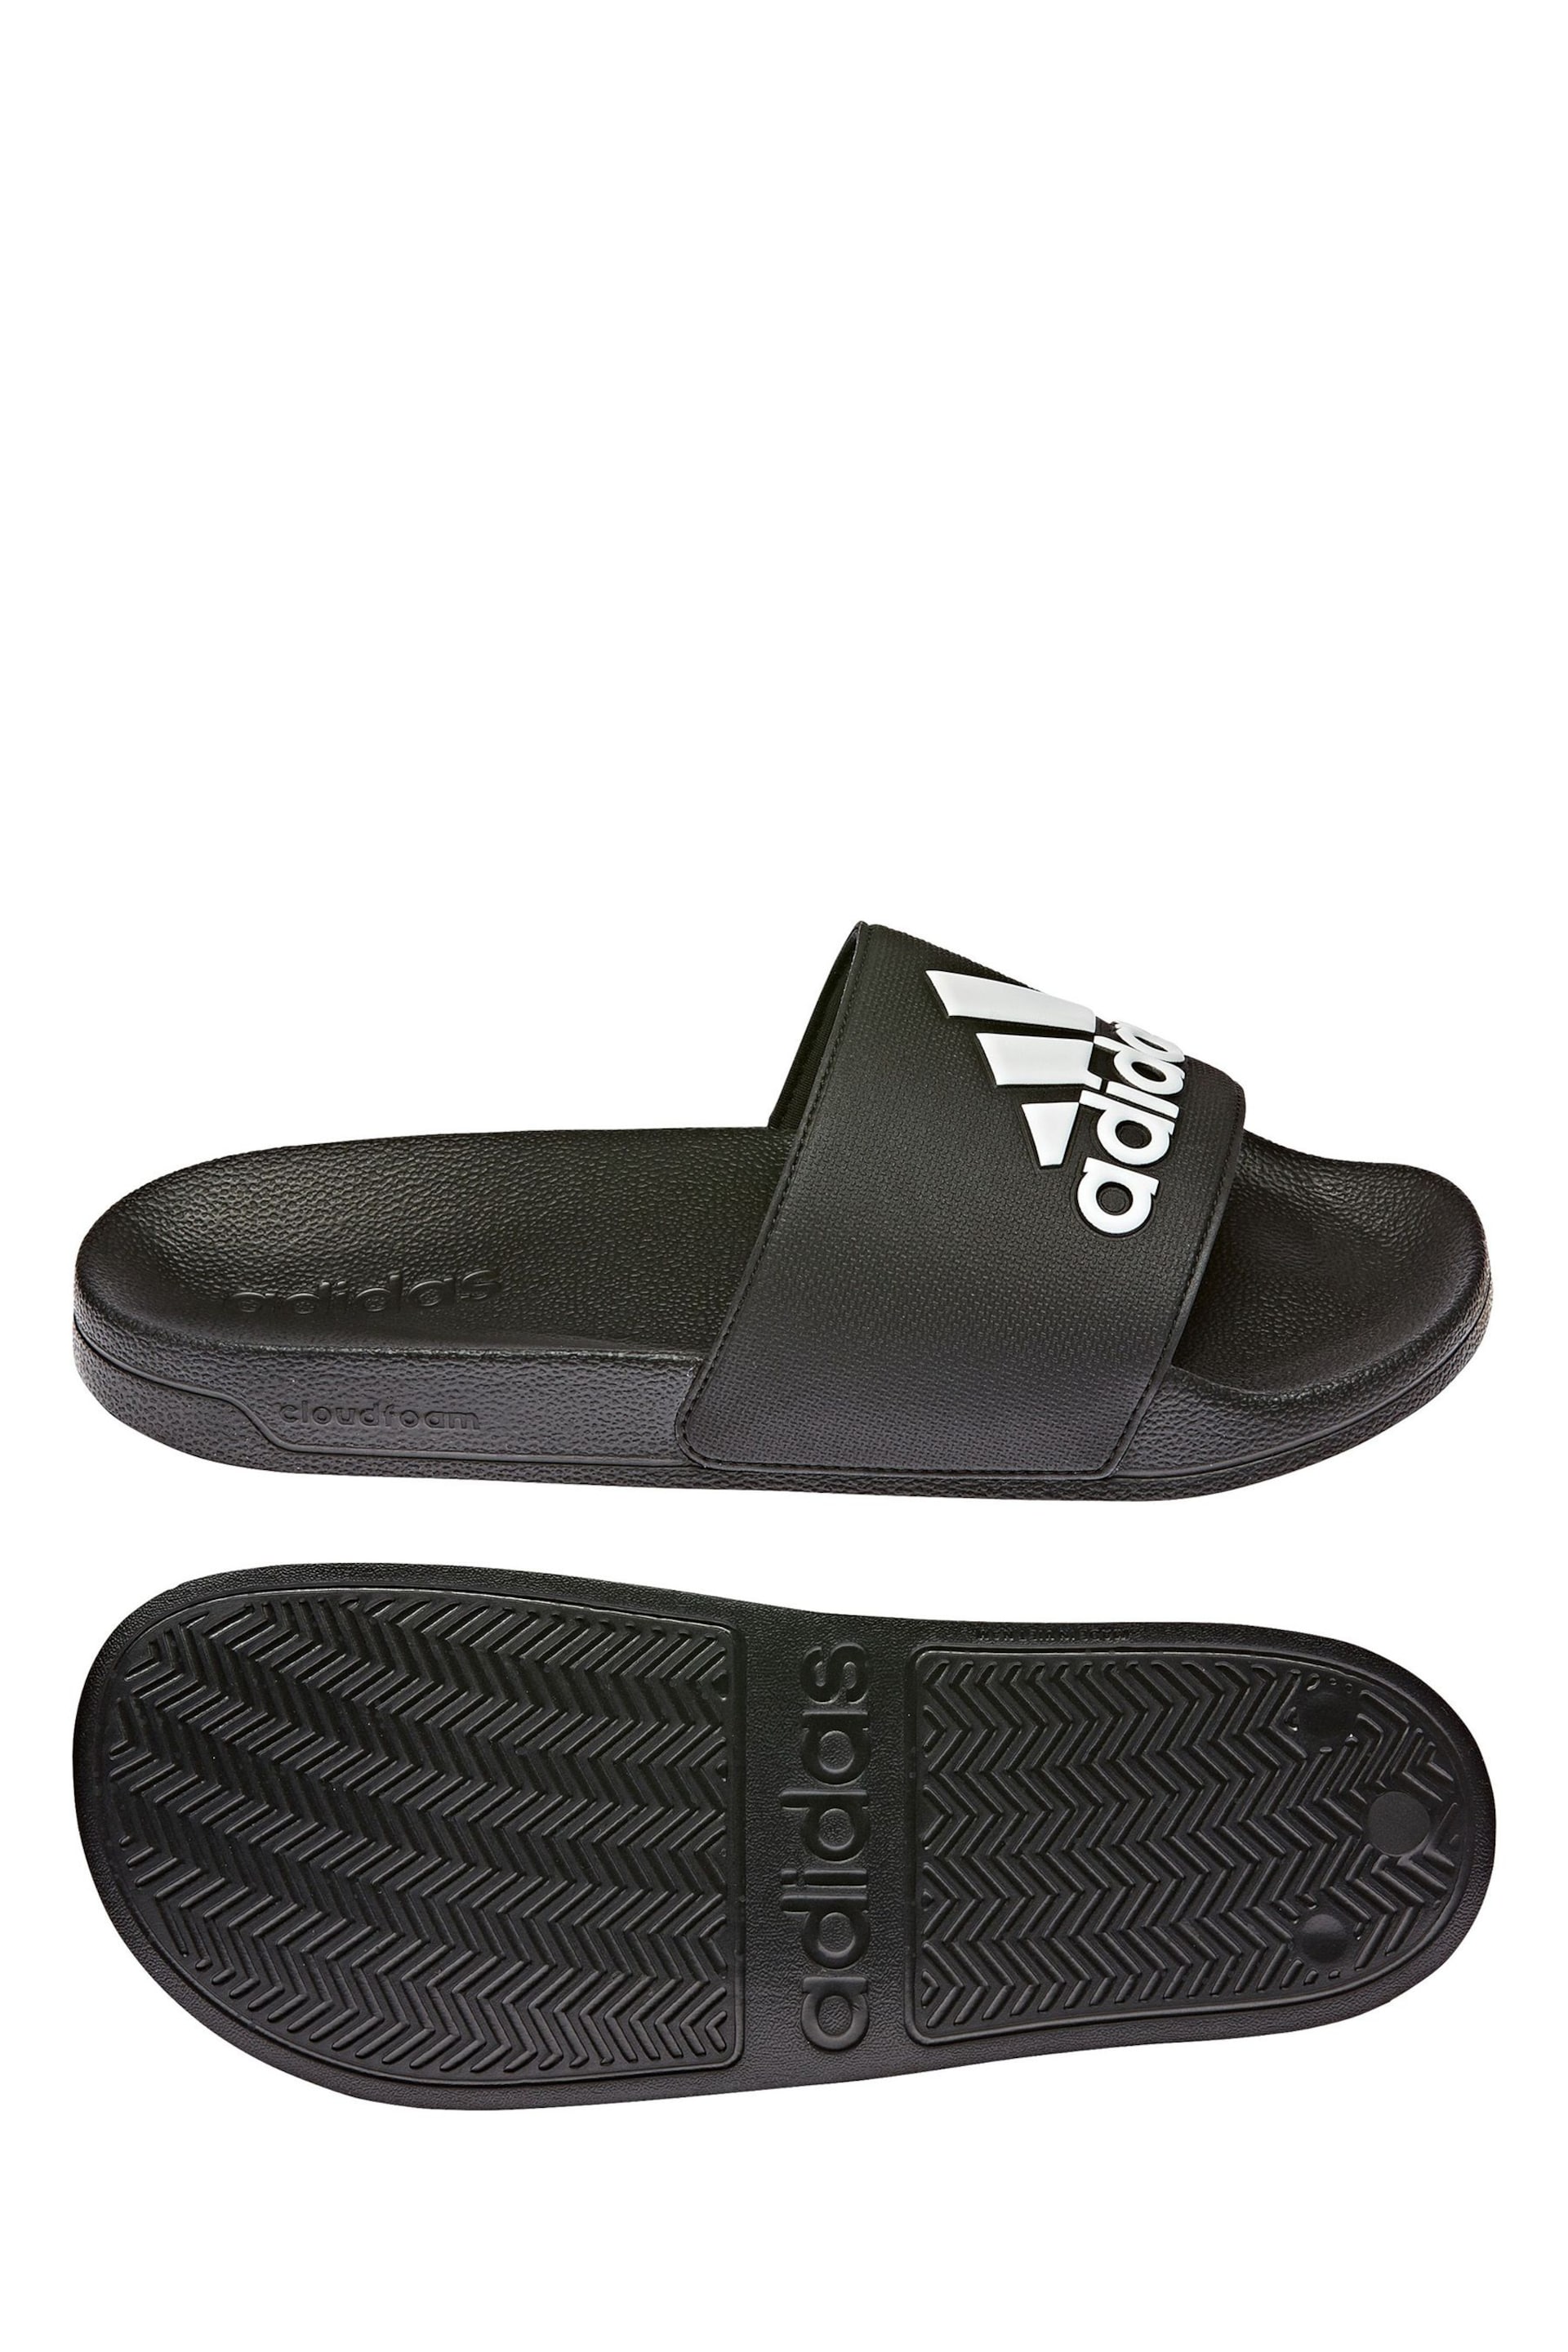 adidas Black Sportswear Adilette Shower Slides - Image 3 of 10